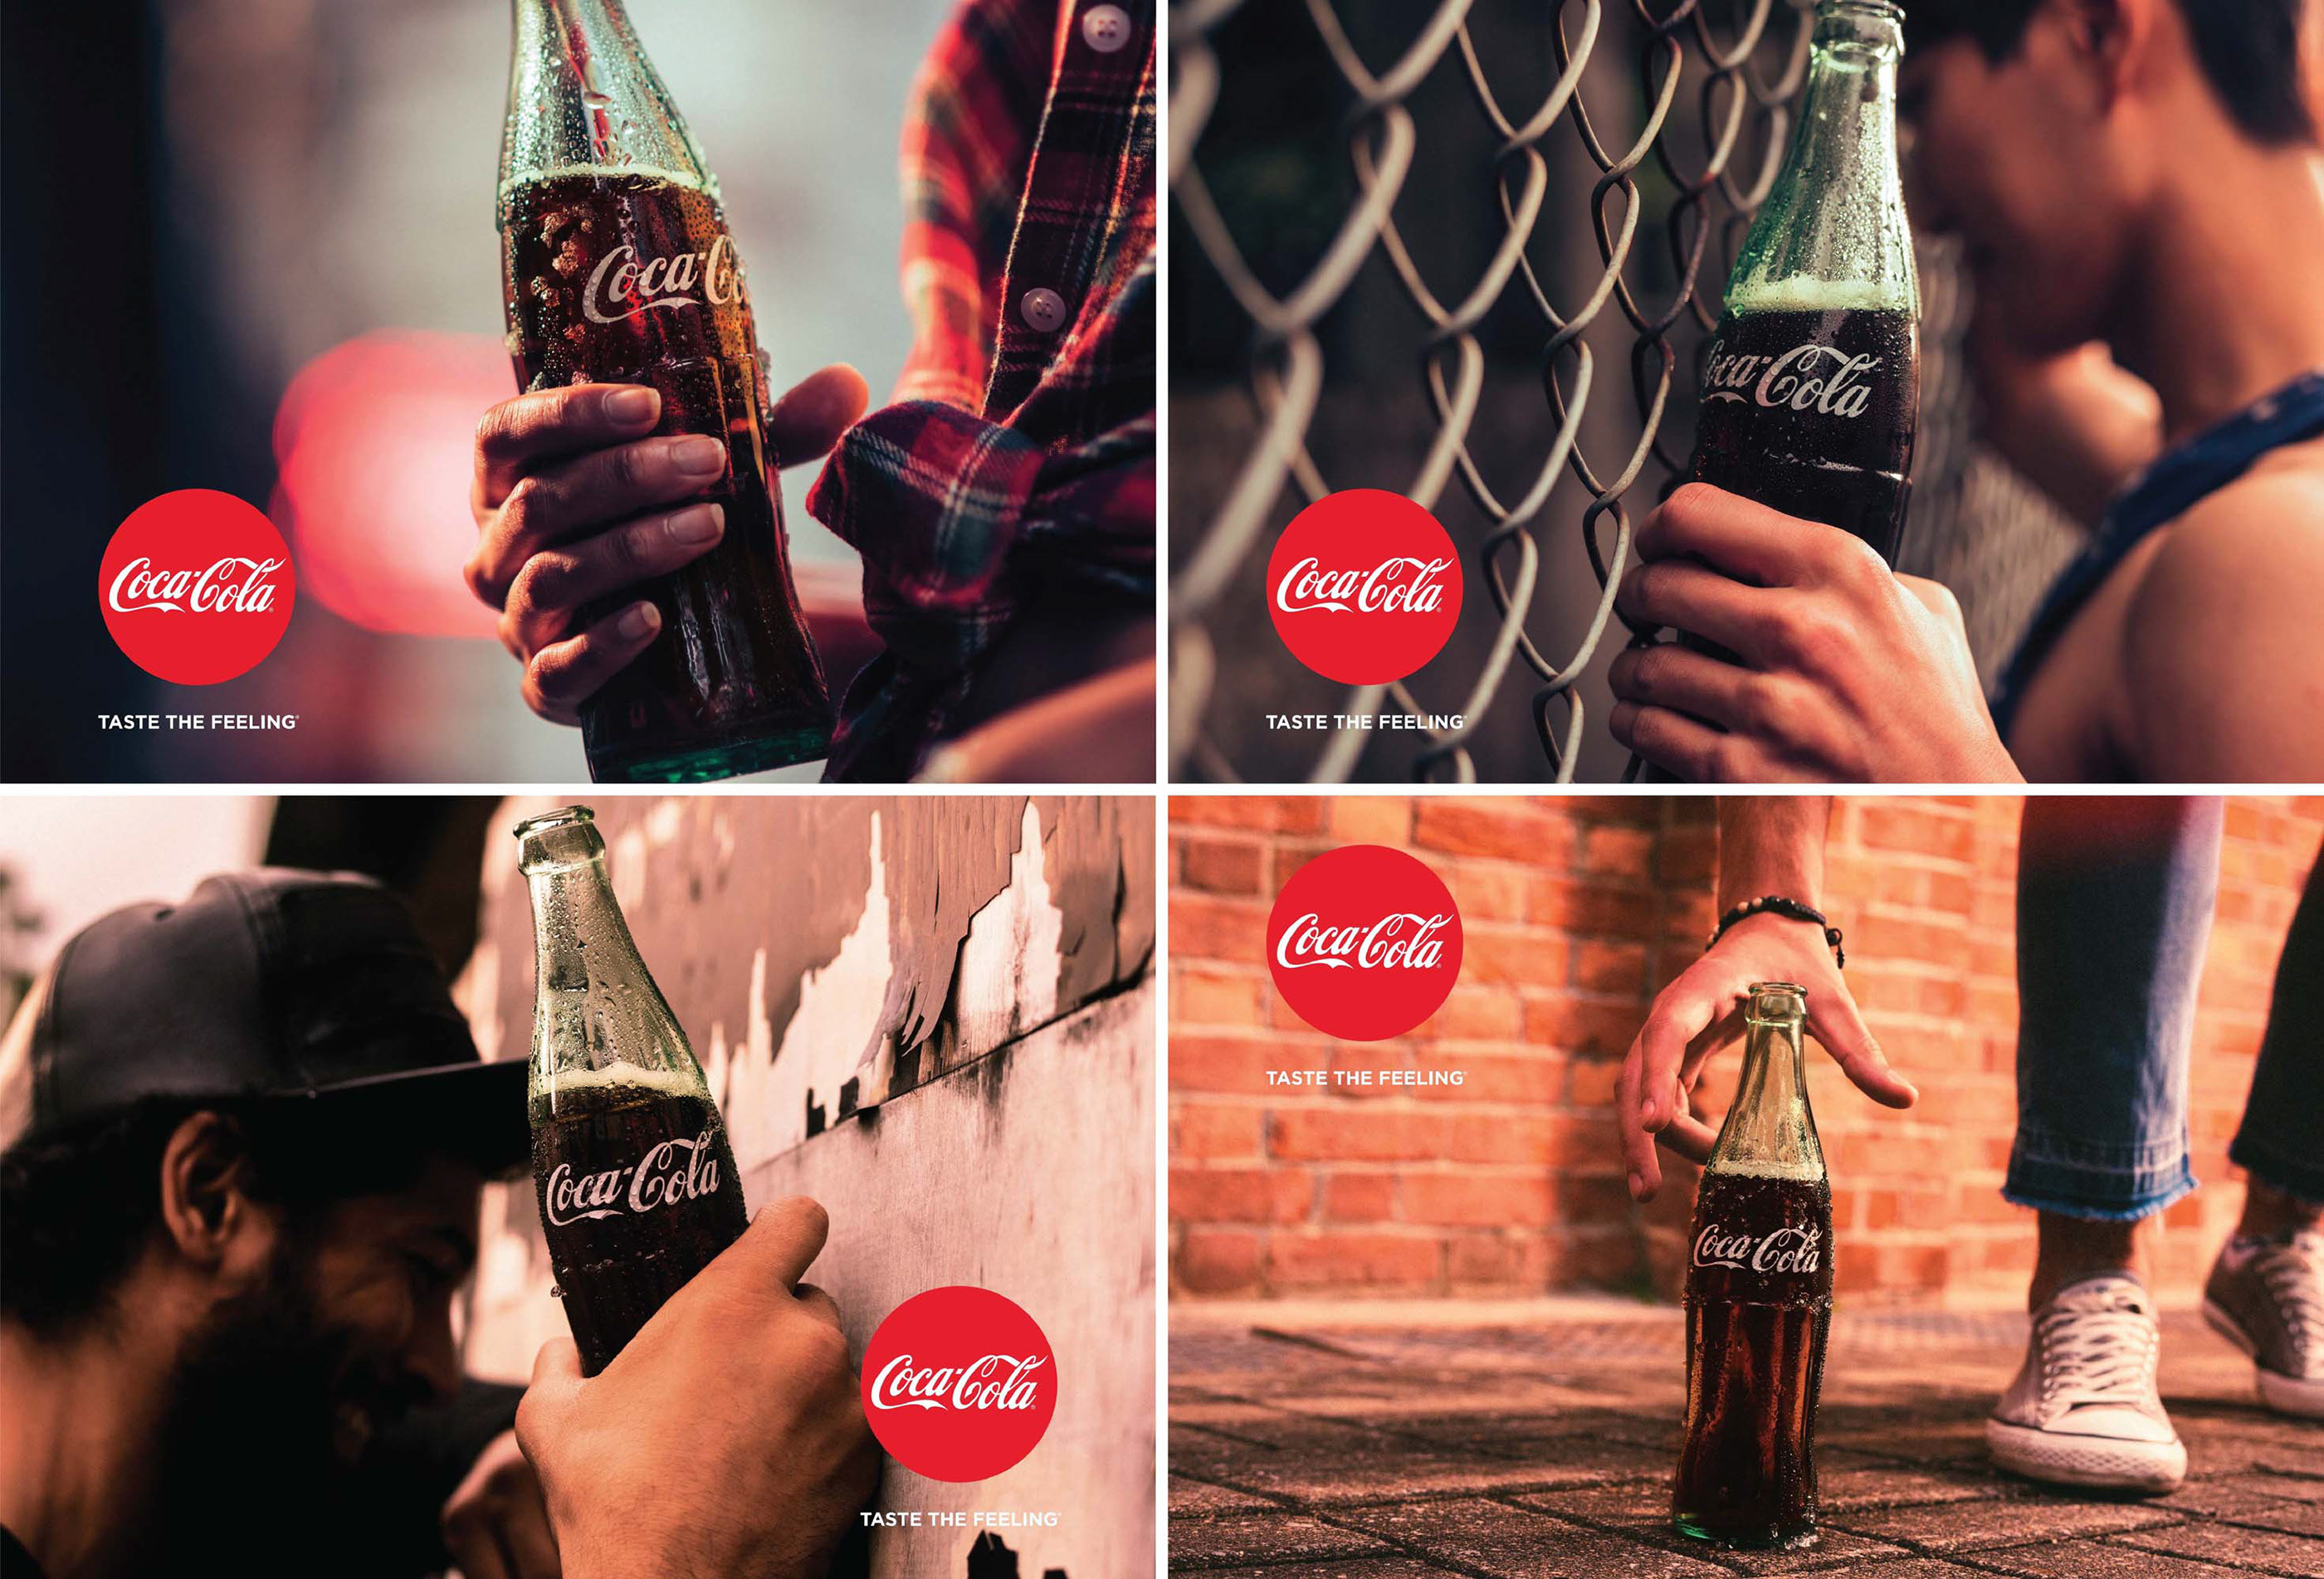 Taste the feeling. Рекламная кампания Кока колы. Coca Cola taste the feeling. Coca Cola taste the feeling ads. Кока кола 2016.